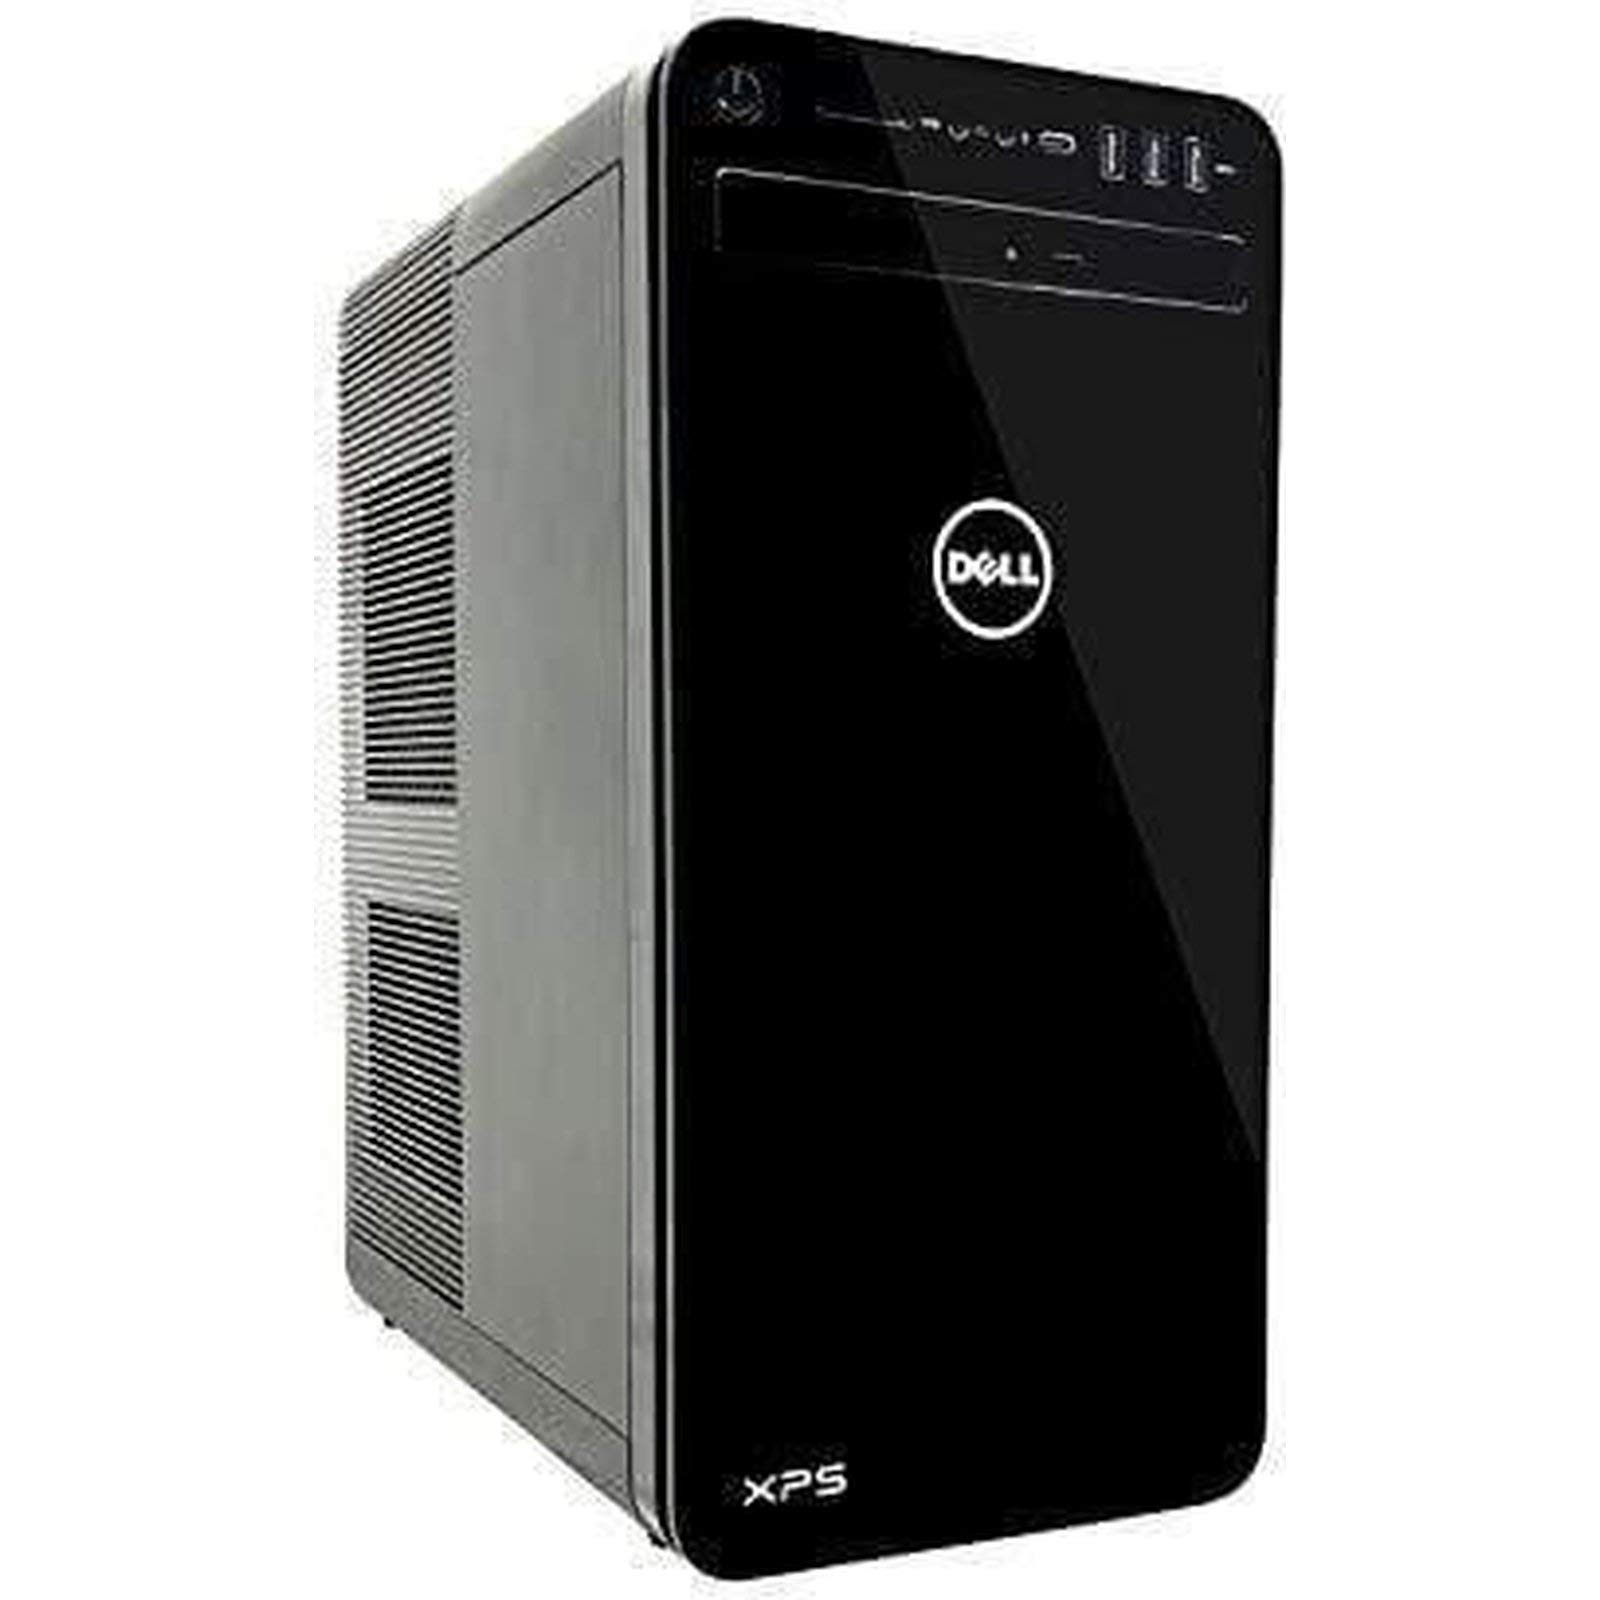 Dell XPS 8930-7764BLK-PUS Tower Desktop - 8th Gen. Intel Core i7-8700 6-Core up to 4.60 GHz, 8GB DDR4 Memory, 1TB SATA Hard Drive, Intel UHD Graphics 630, DVD Burner, Windows 10 Pro, Black